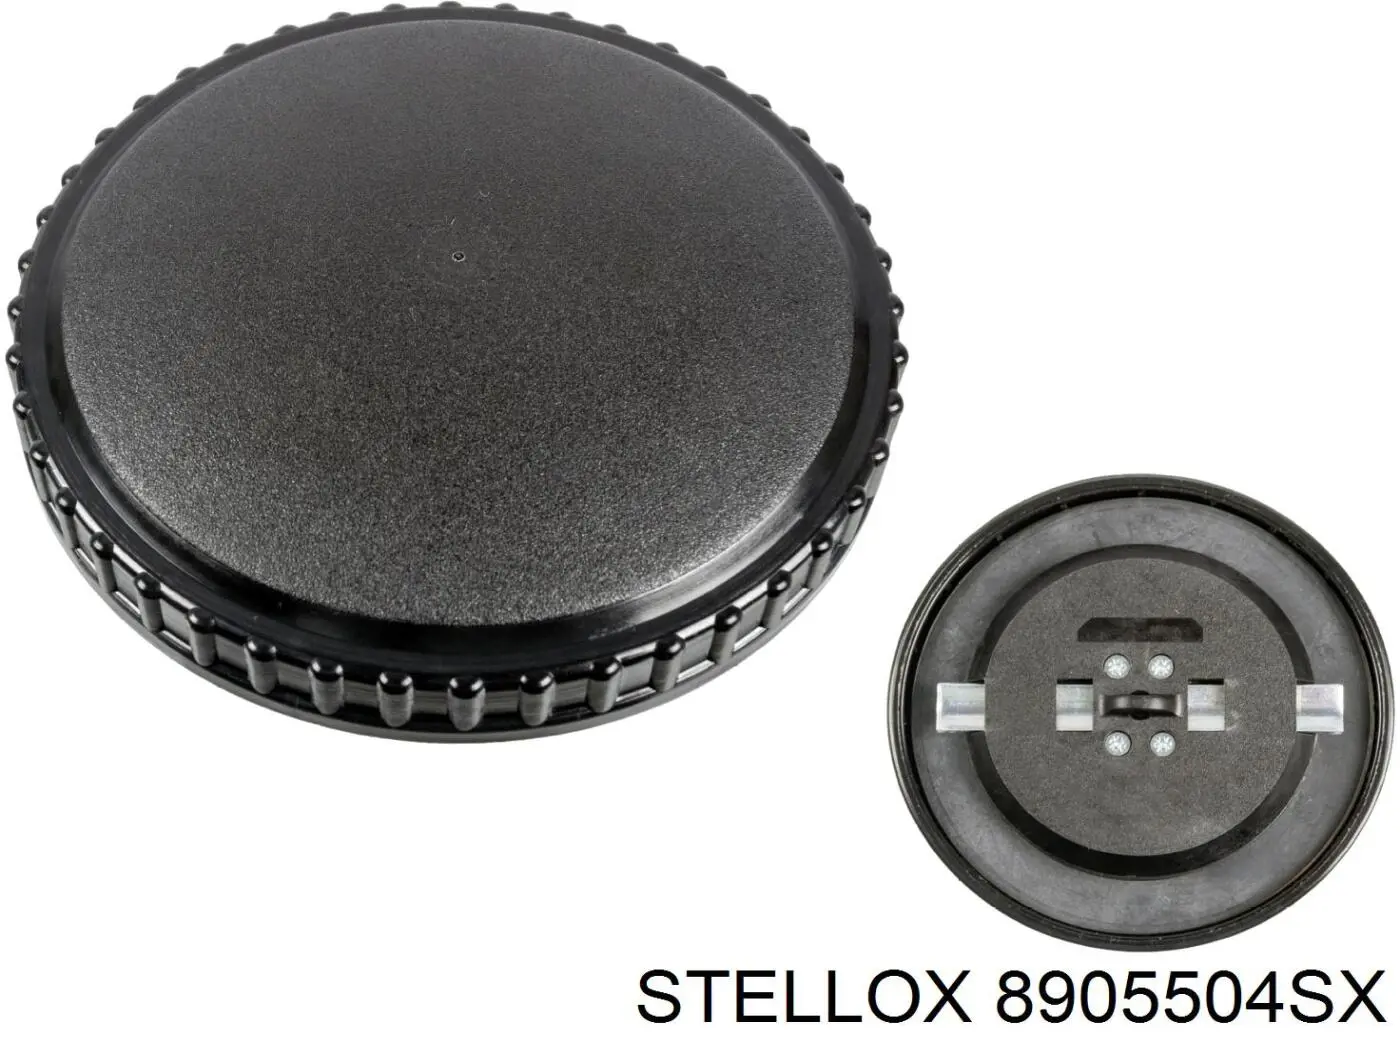 89-05504-SX Stellox крышка (пробка бензобака)